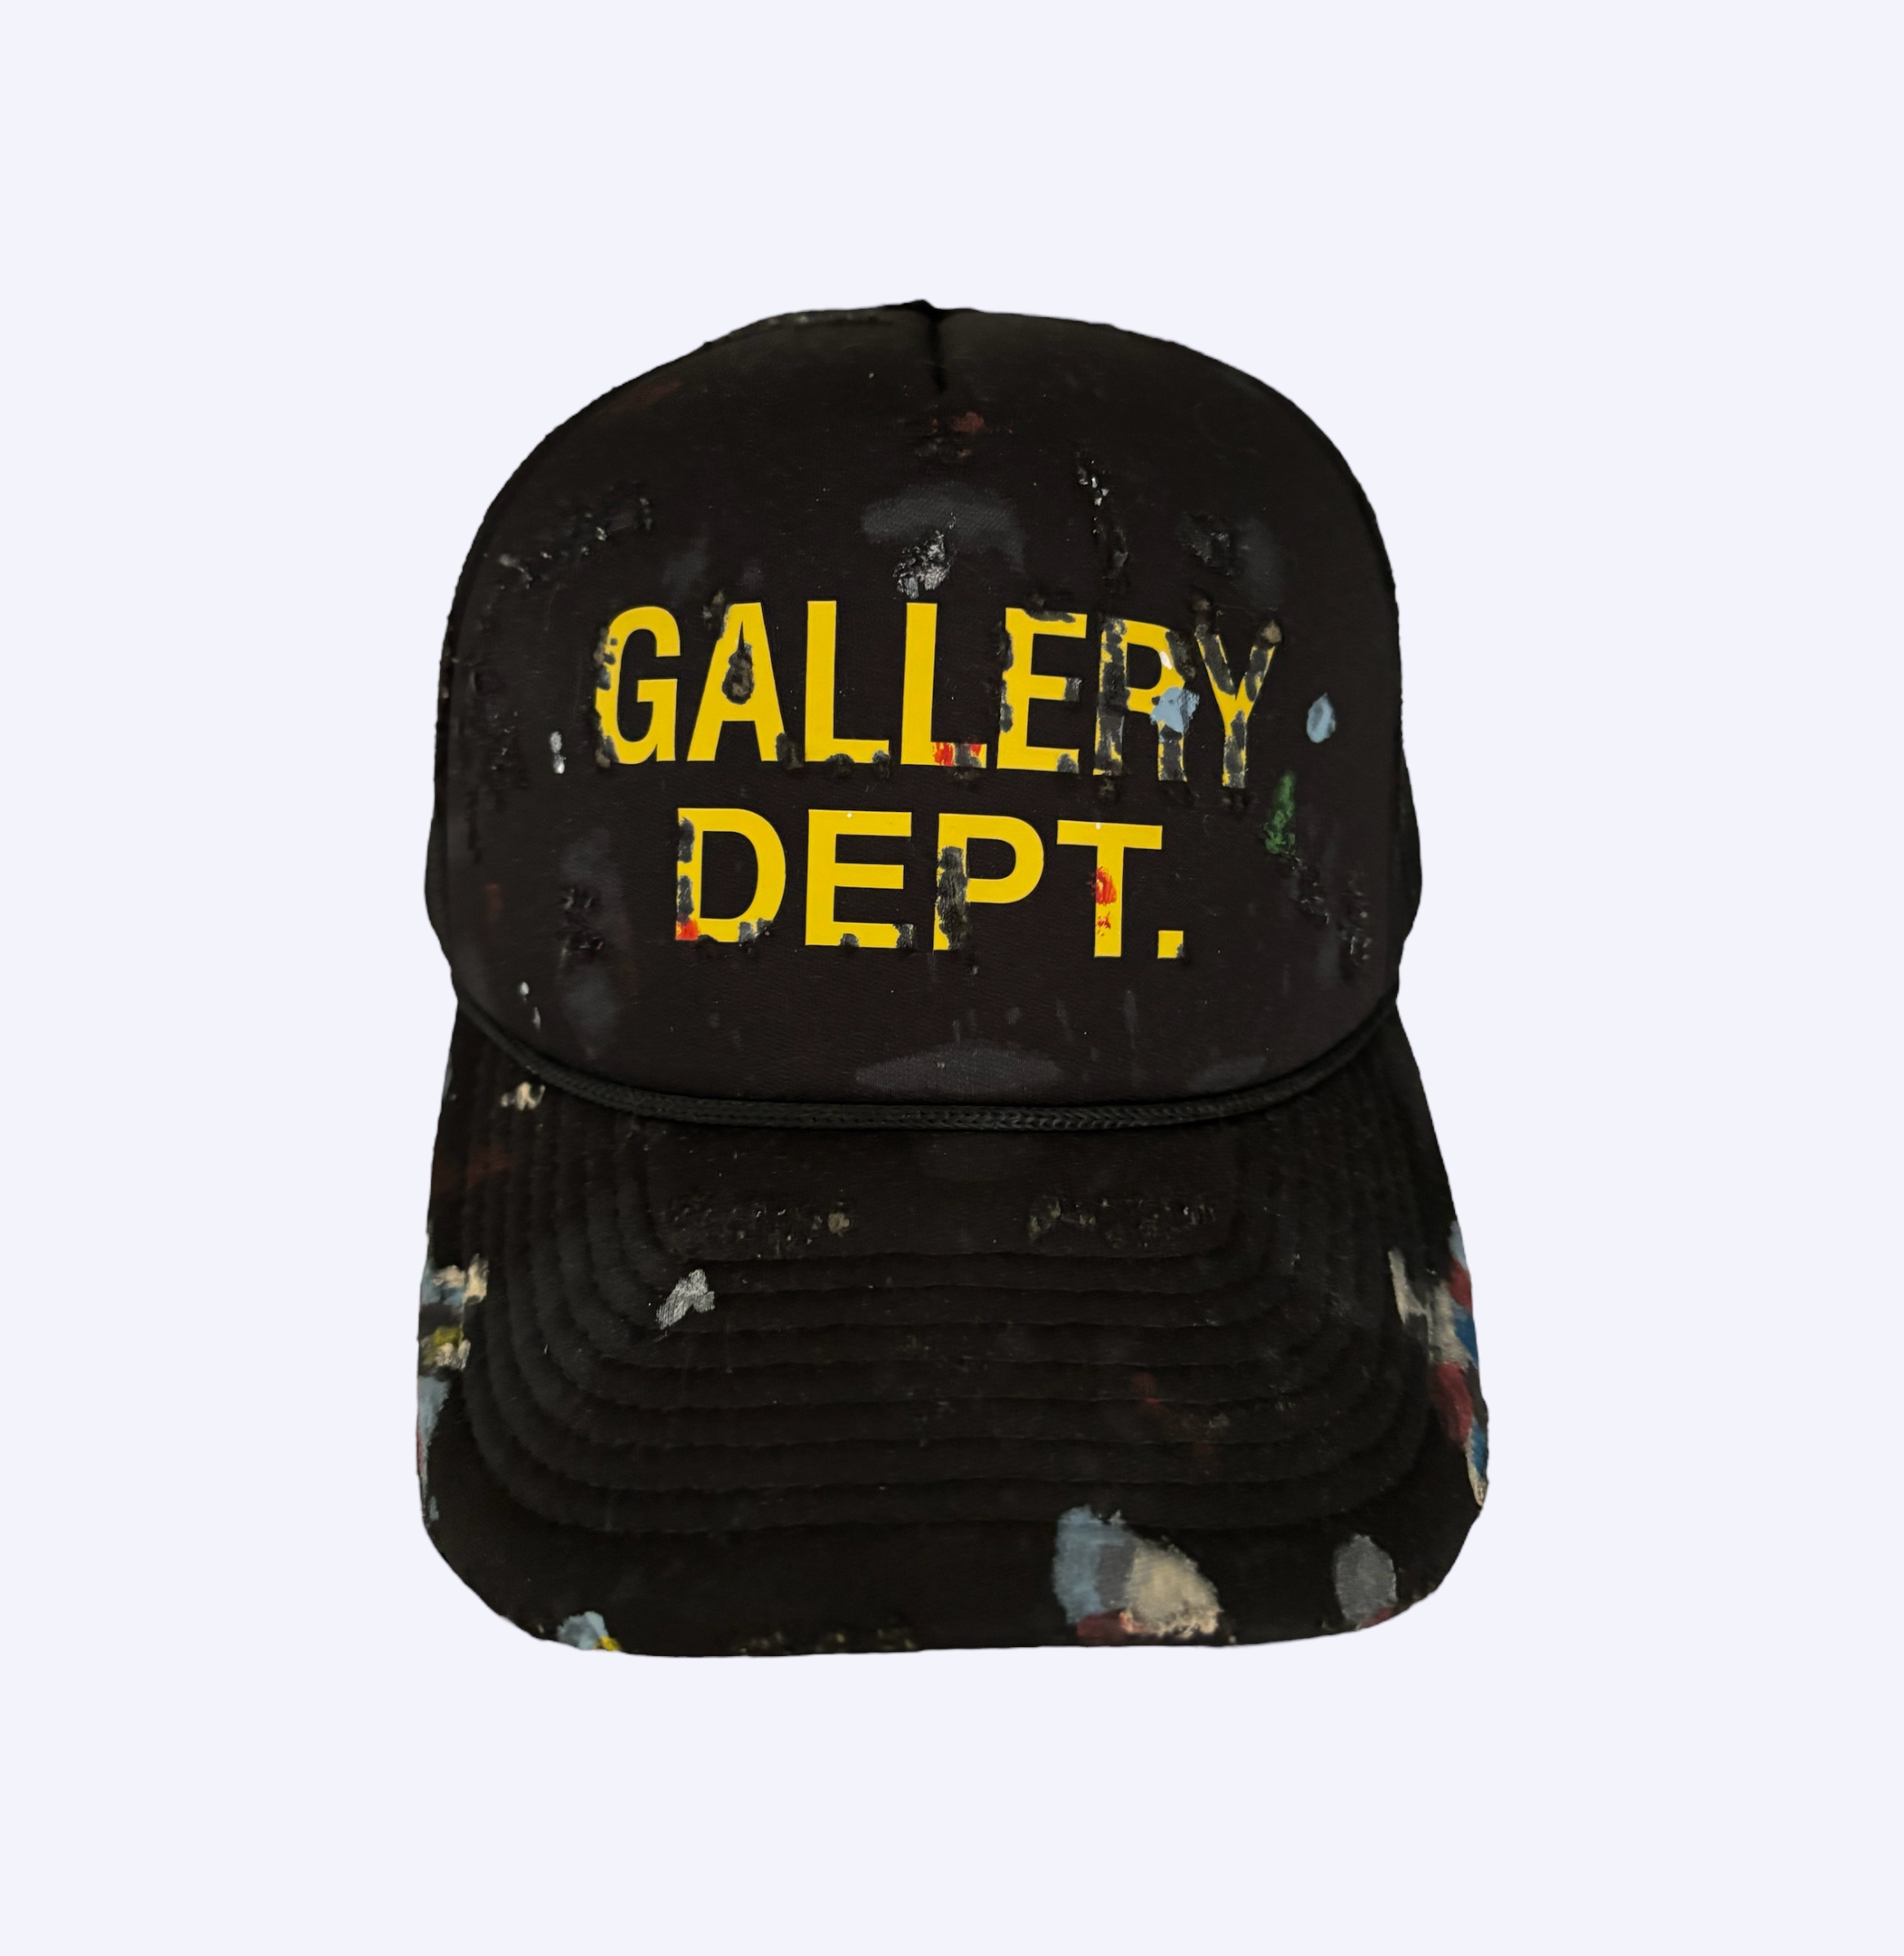 Gallery Dept Splatter painter trucker hat in black